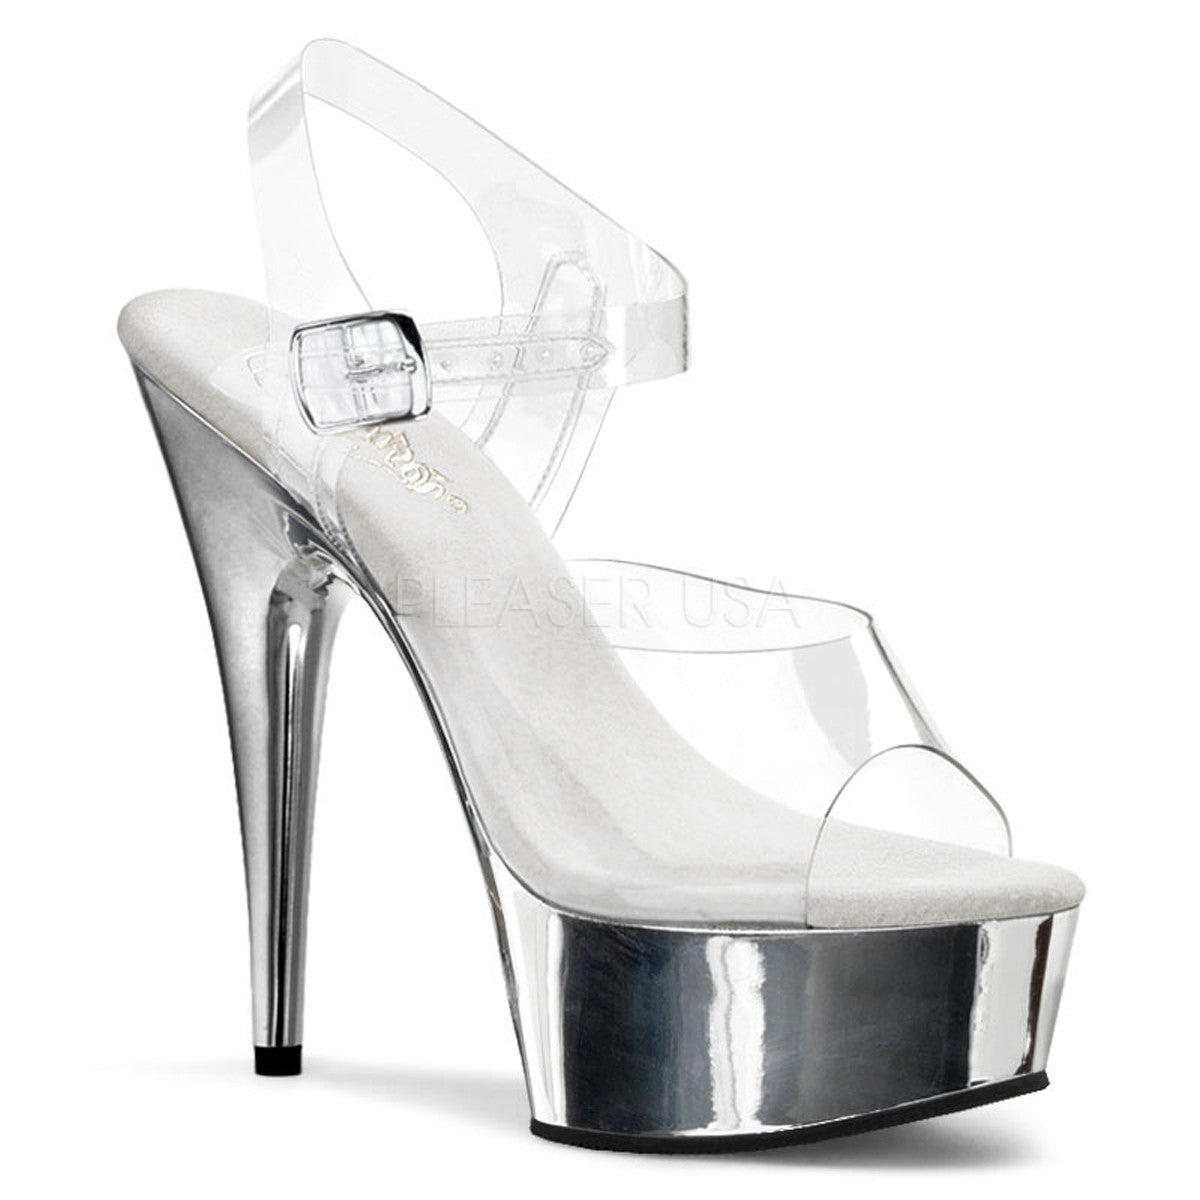 PLEASER DELIGHT-608 Clear-Silver Chrome Ankle Strap Sandals - Shoecup.com